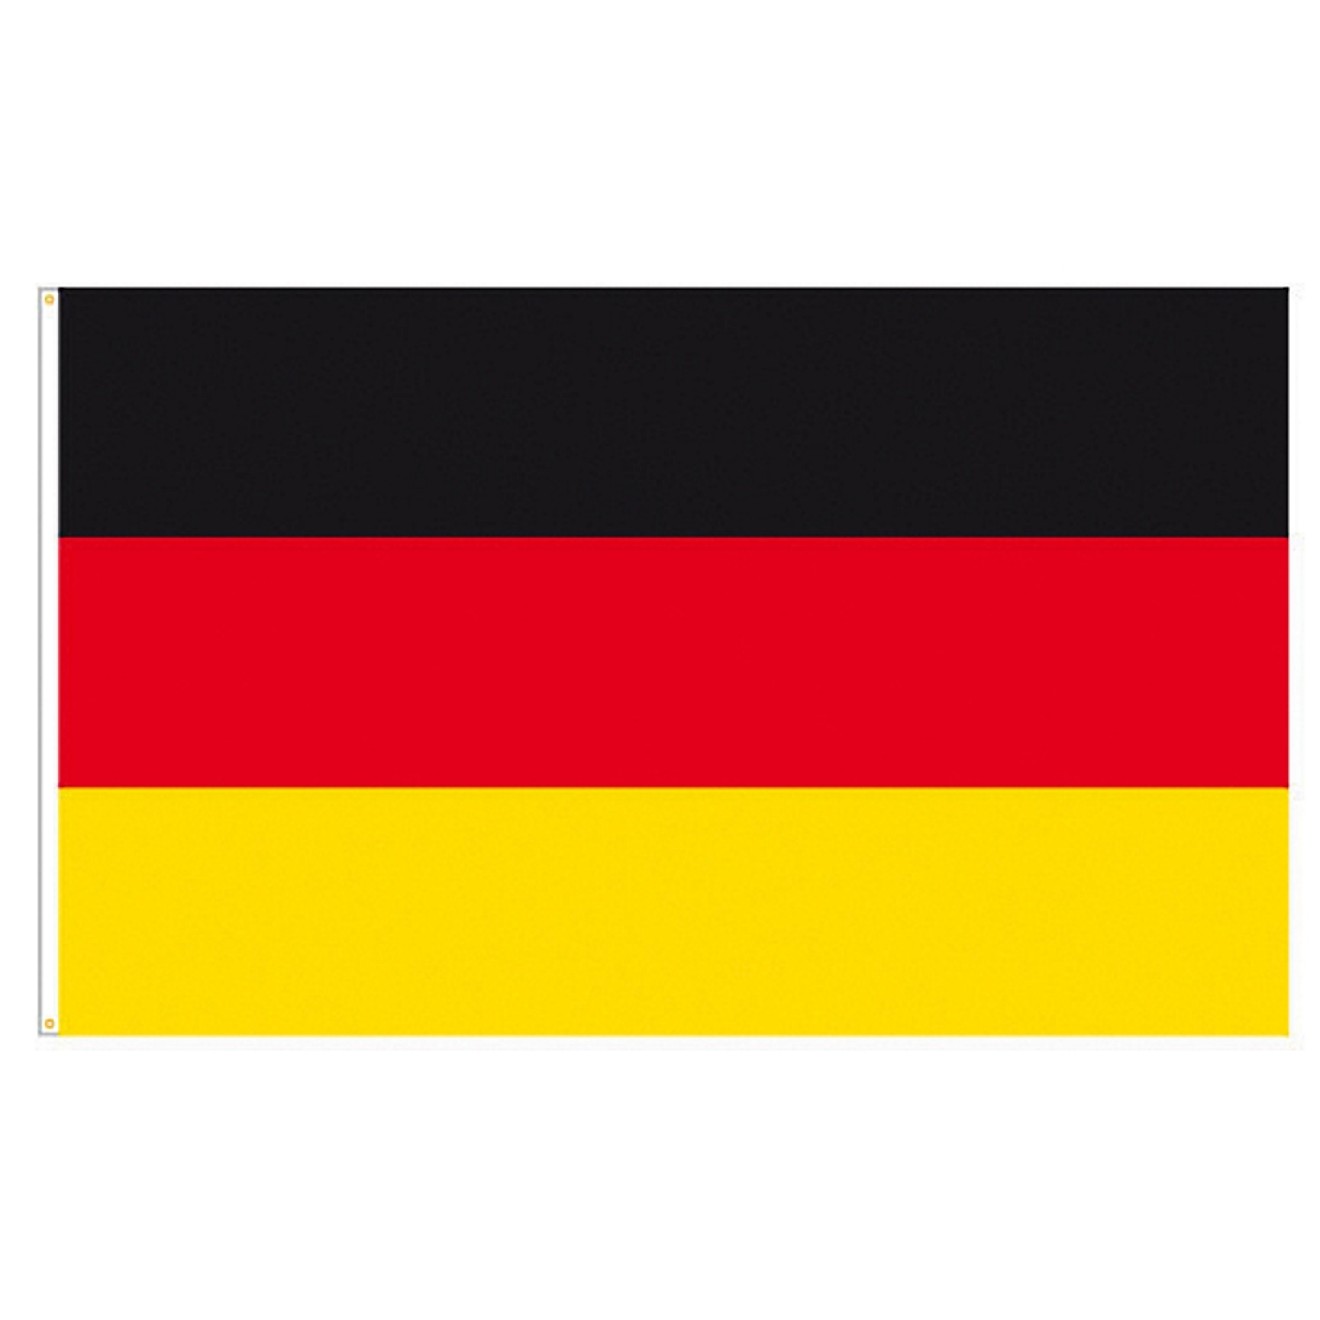 https://www.partydiscount24.de/images/thumbnail/produkte/large/Themenparty/Laenderdeko/Fanflagge-Deutschland-WM.jpg